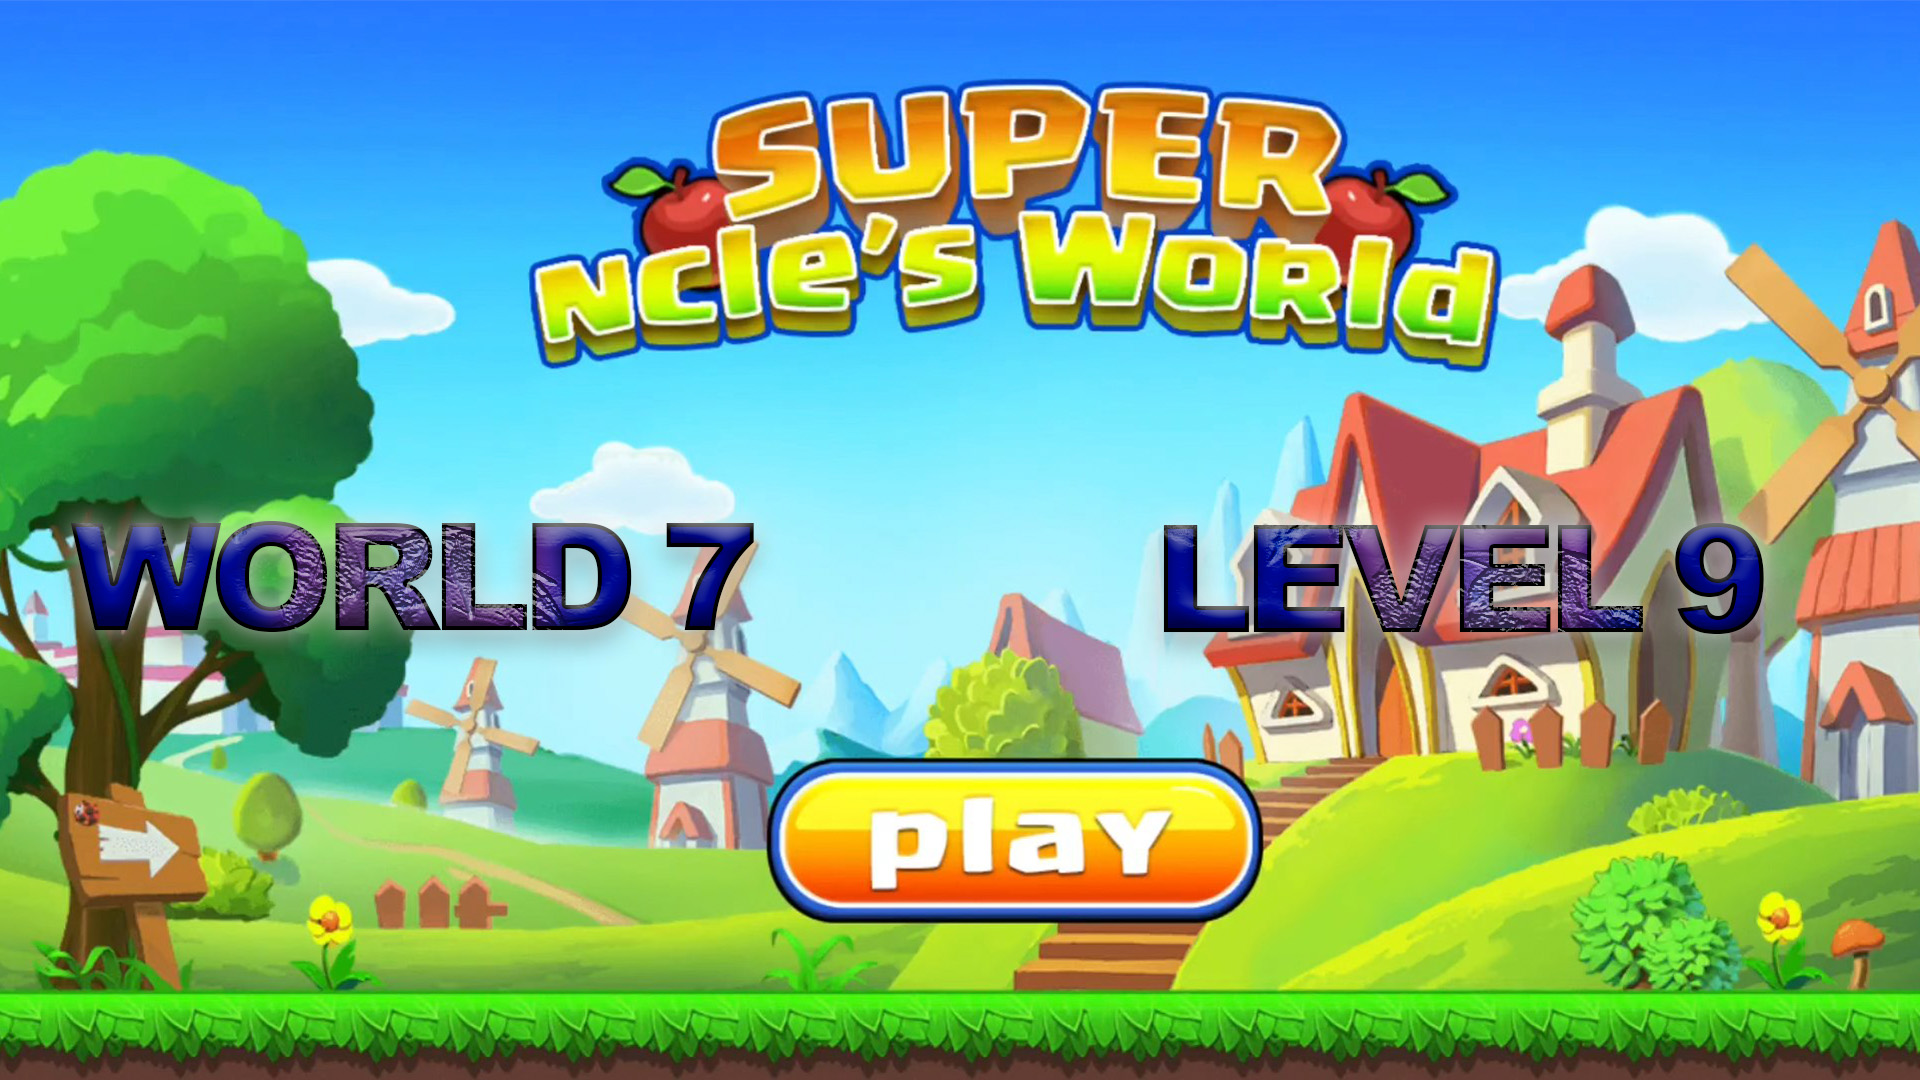 Super ncle's  World 7. Level 9.